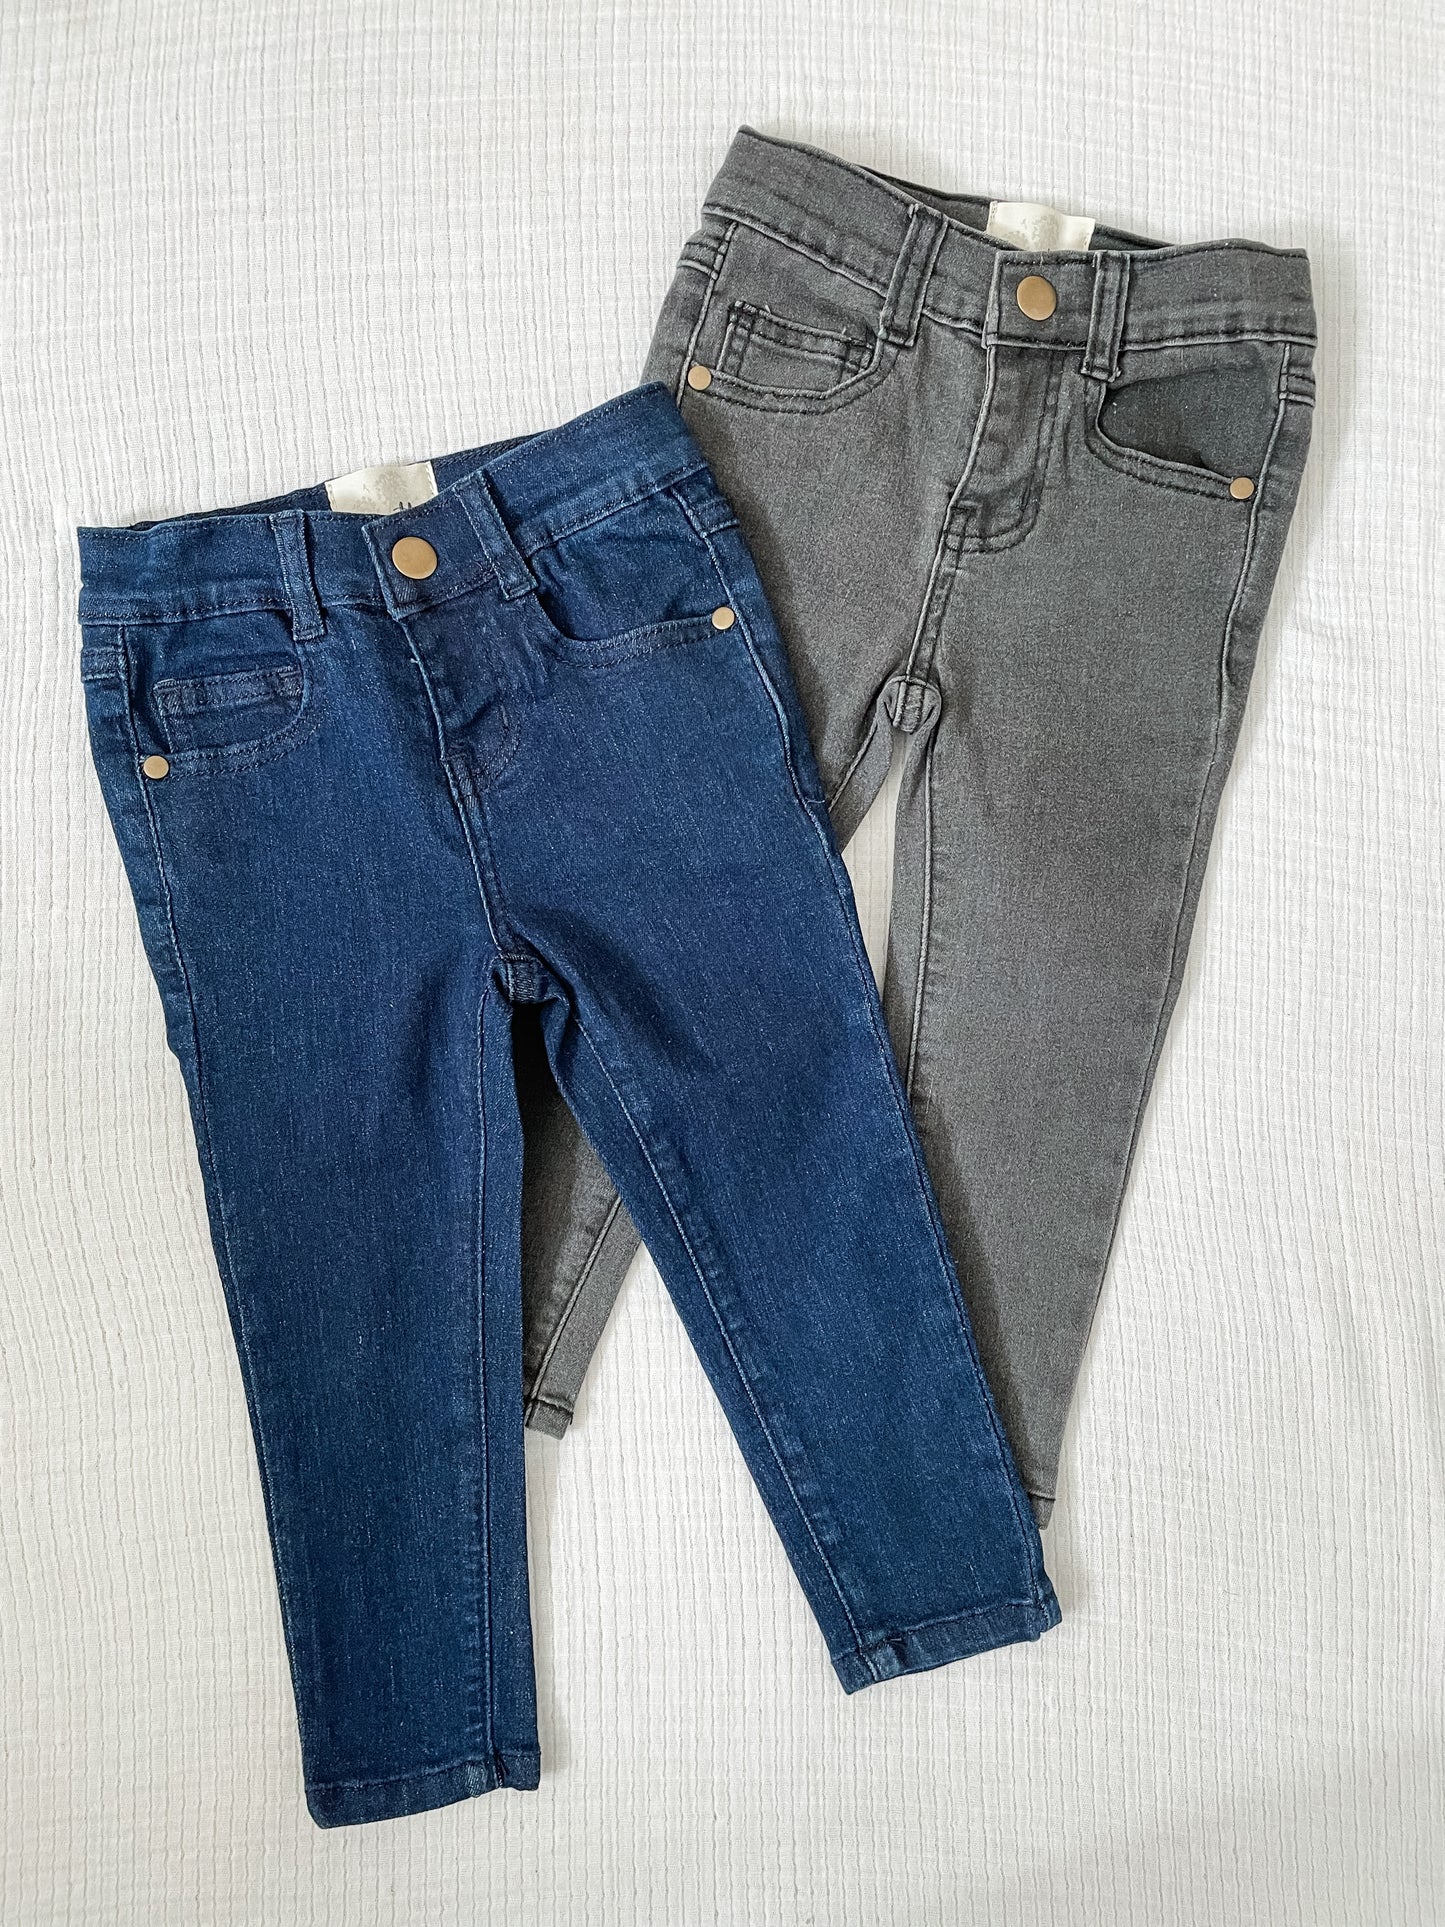 covelRachel Denim Jeans - Grey Wash - Premium jeans from Vignette - Just $28! Shop now at covelgirls, kid bottom, Kids, Toddlercovel